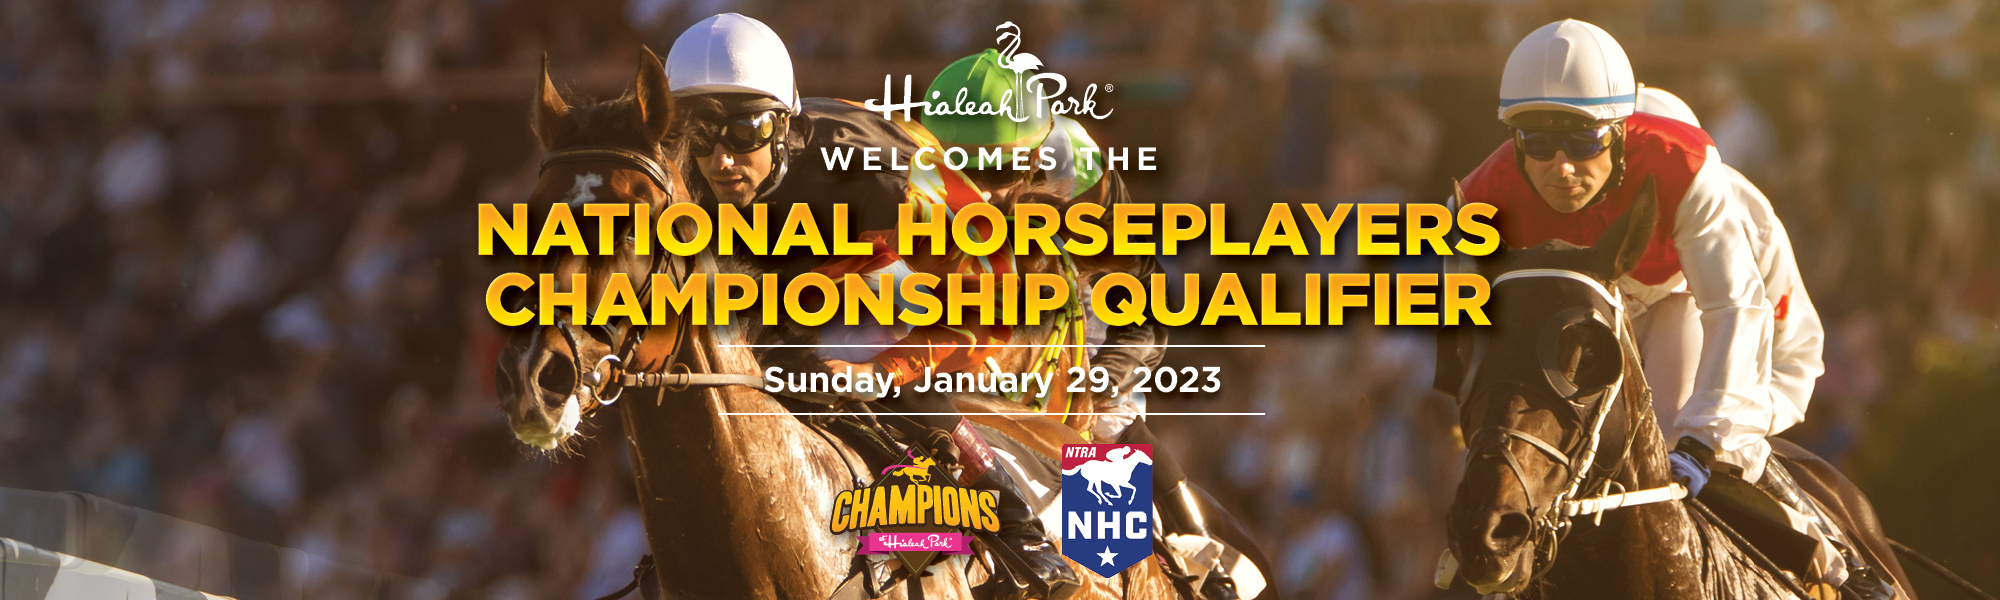 National Horseplayers Championship Qualifier - Sunday, January 29